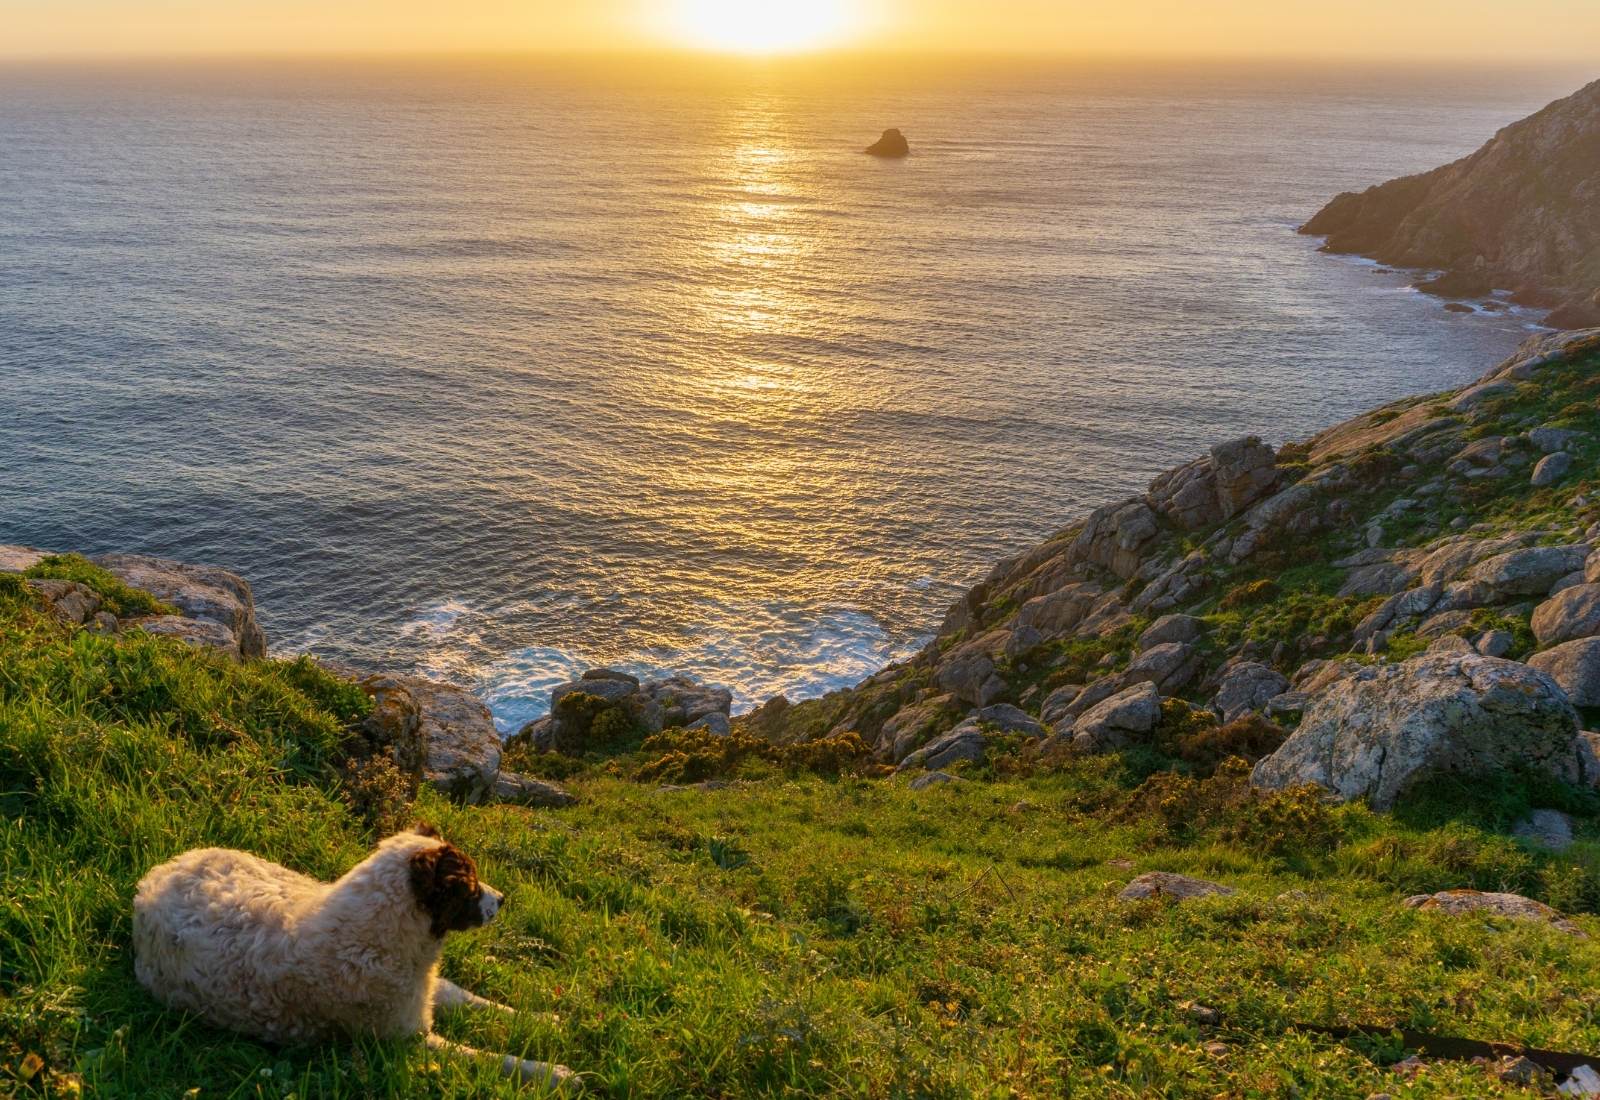 Un perro frente al atardecer de la costa de Finisterre